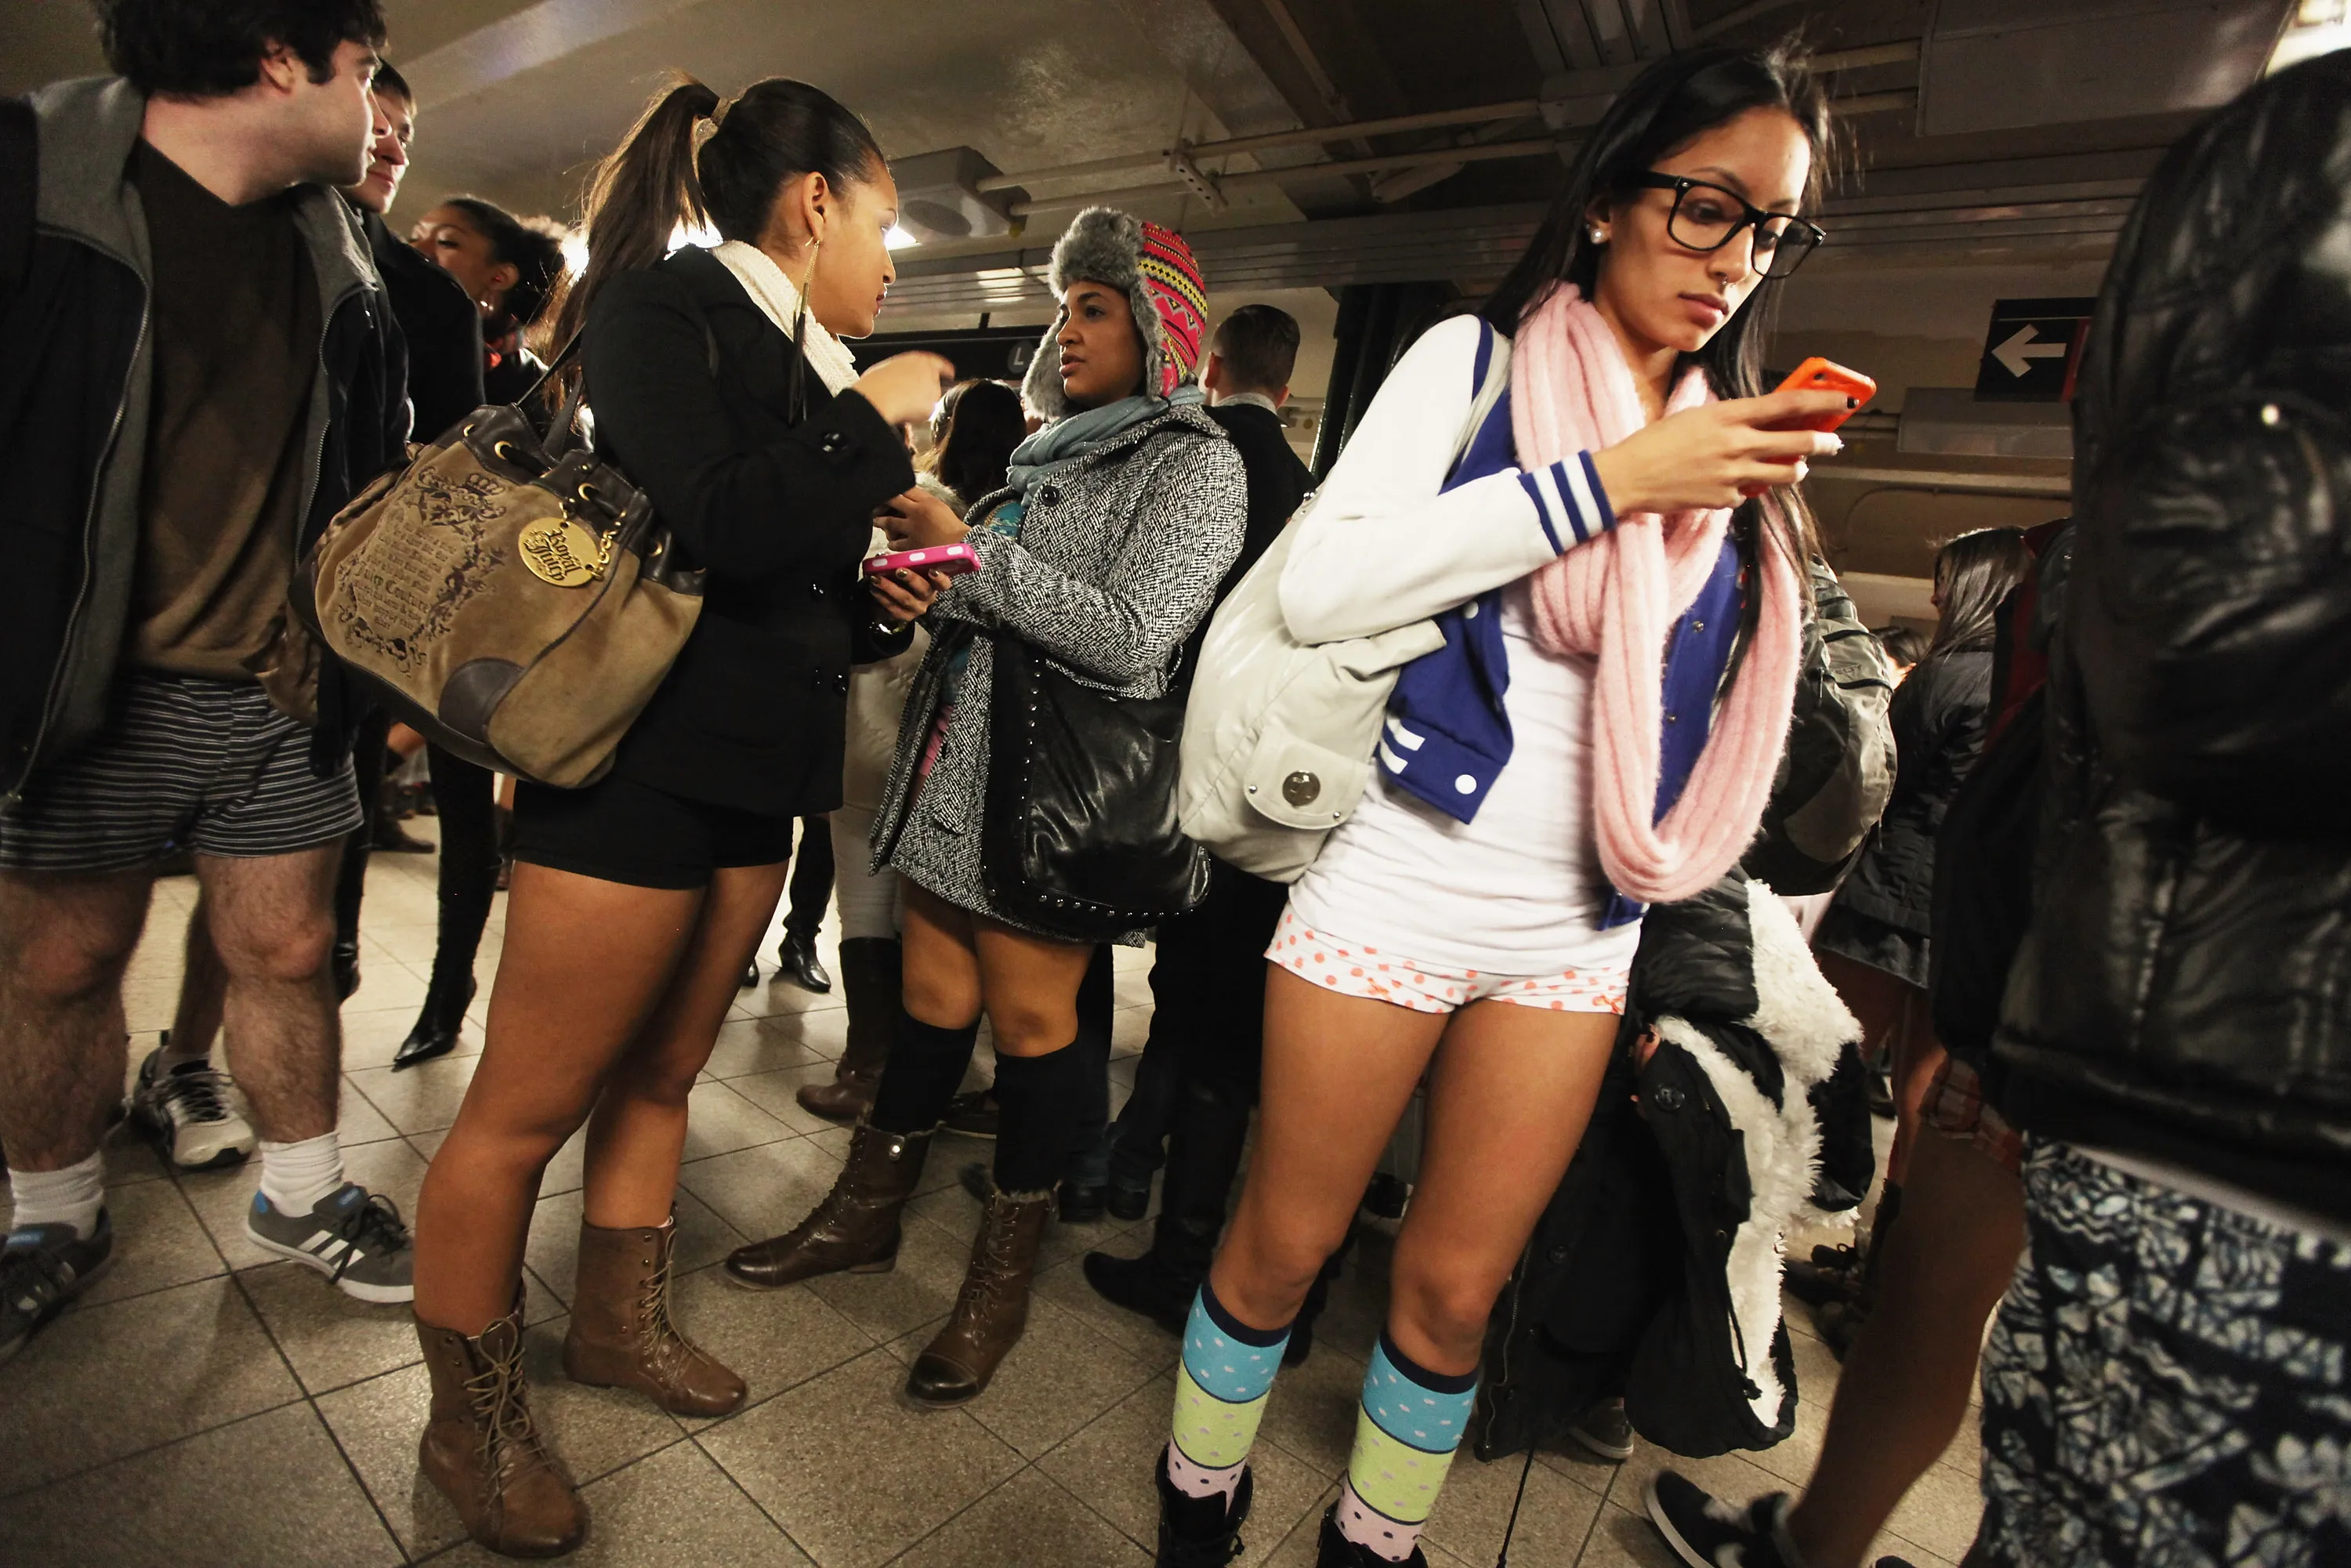 Annual “no Pants” Subway Ride Takes Place On Nycs Subways 